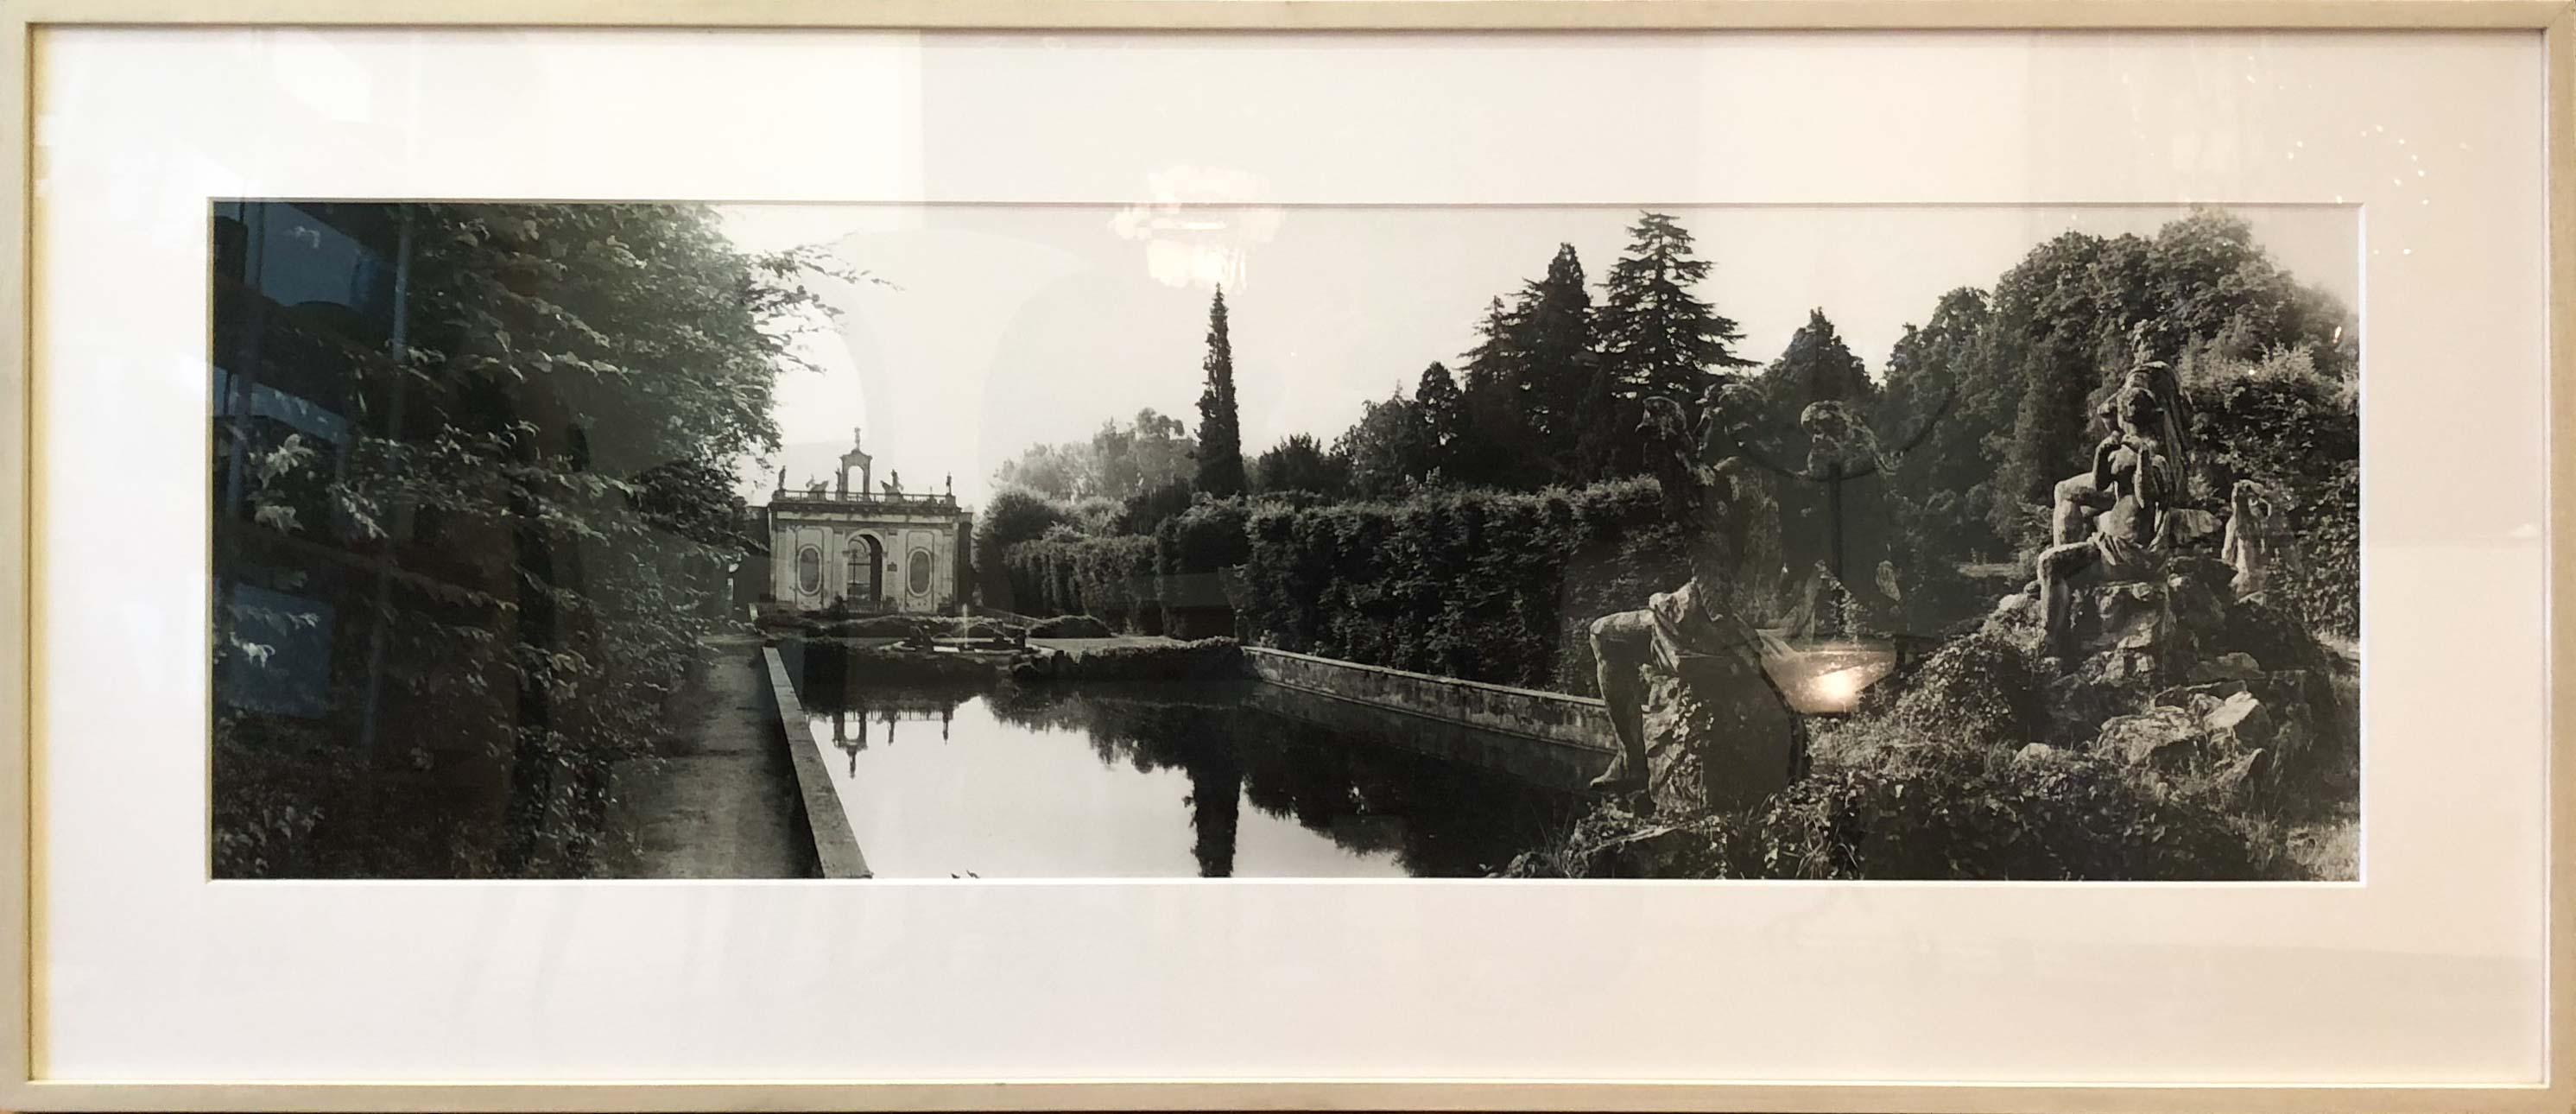 Geoffrey James Landscape Photograph - Villa Barbargio, Valsanzibio